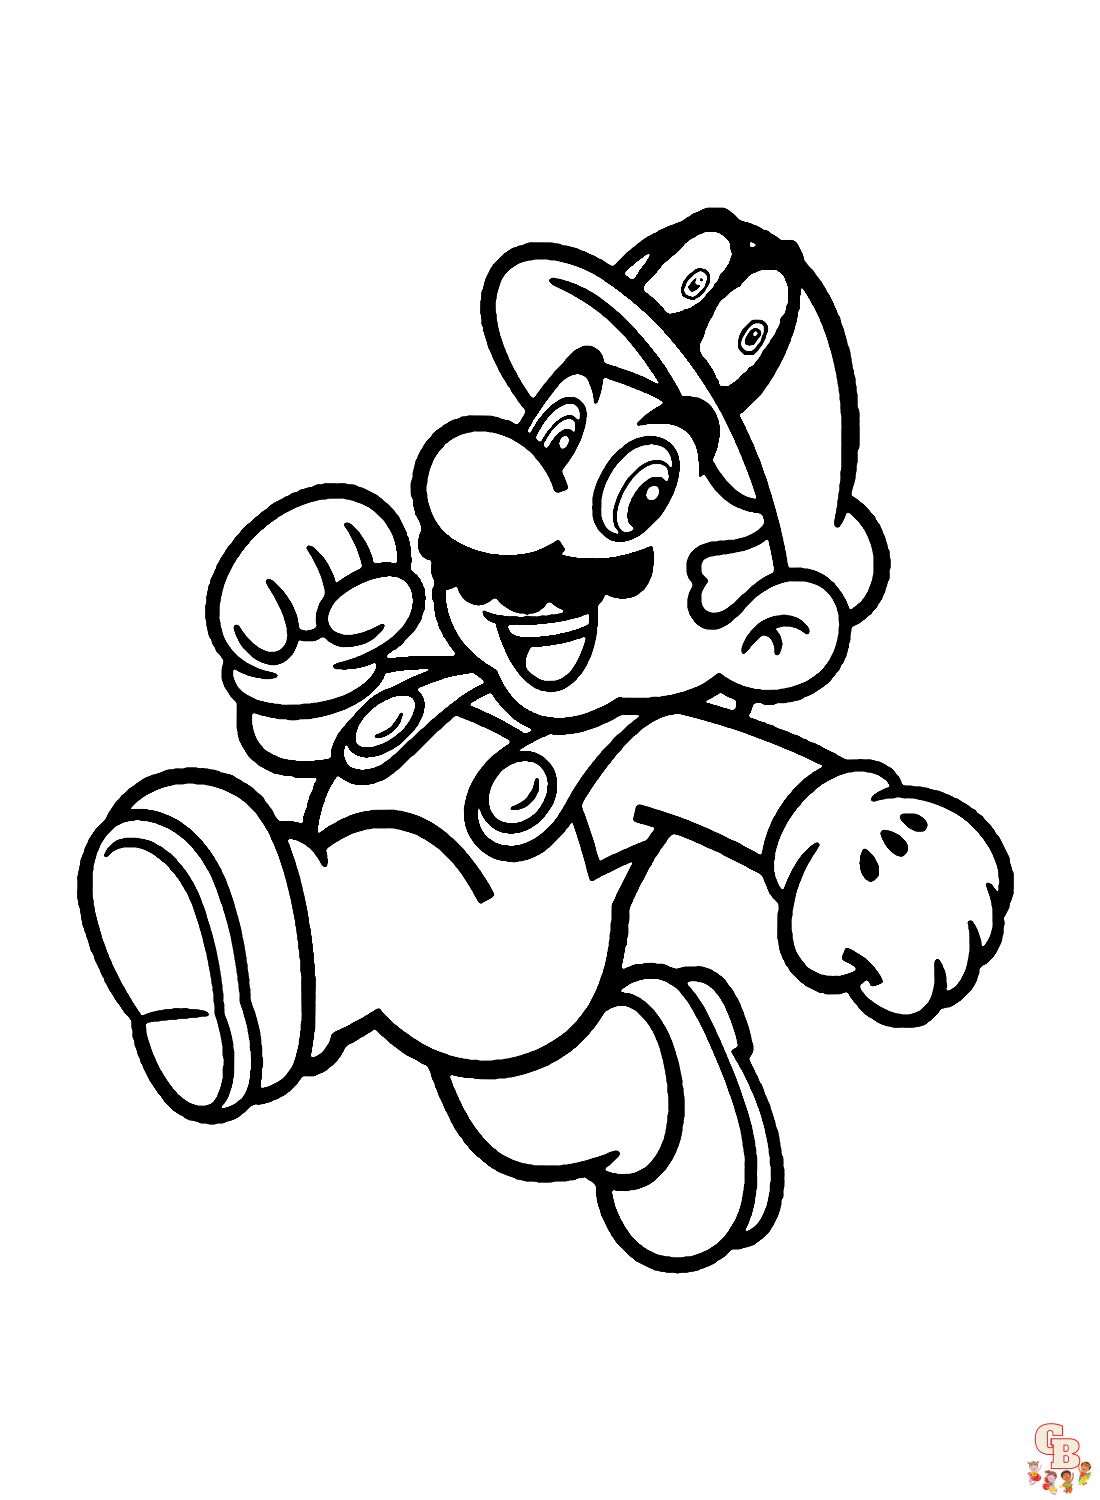 Mario from Mario Odyssey